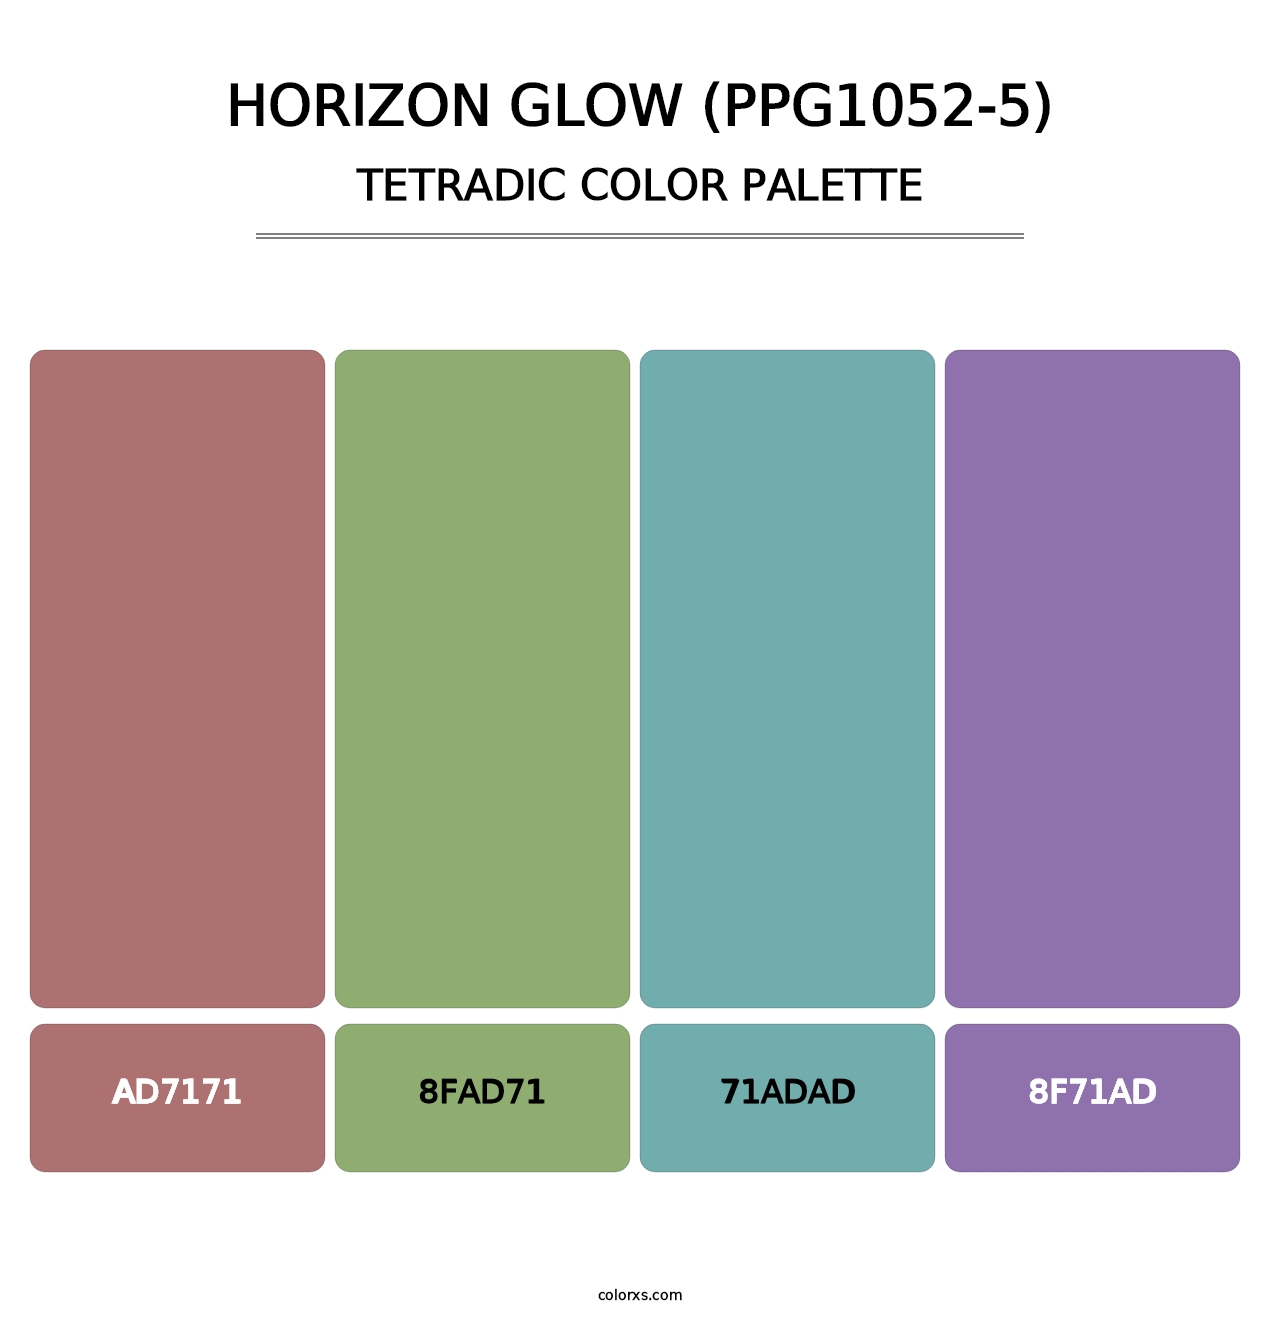 Horizon Glow (PPG1052-5) - Tetradic Color Palette